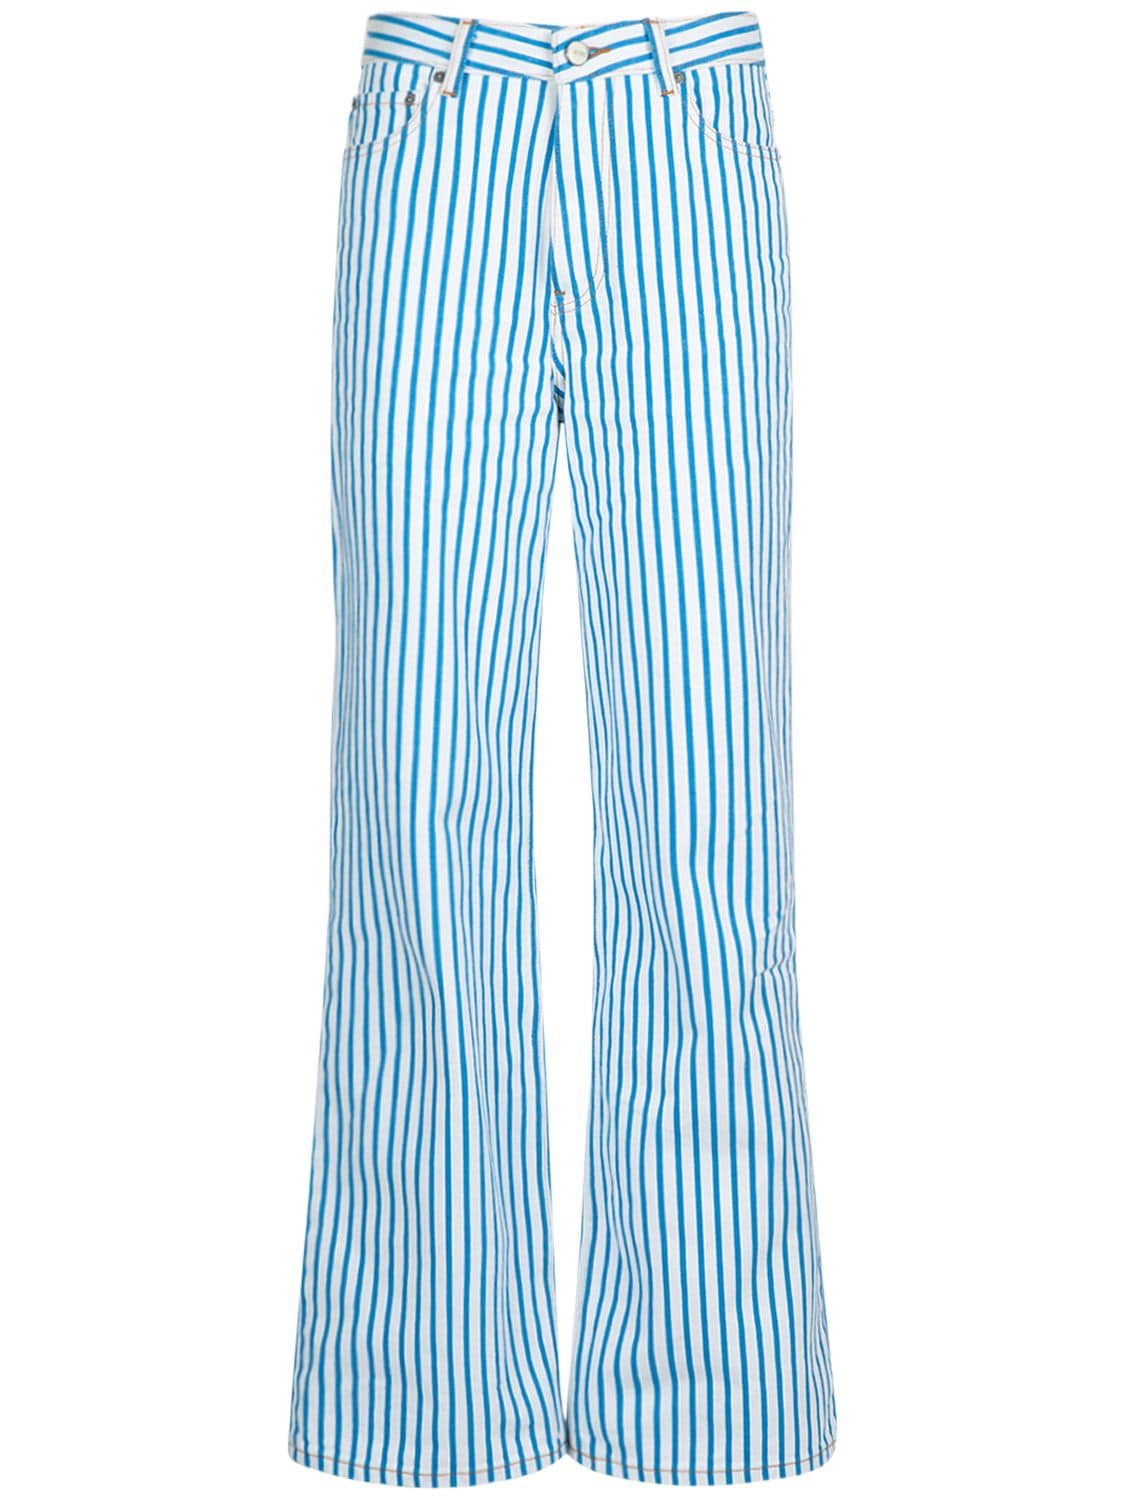 GANNI Striped Cotton Denim Jeans